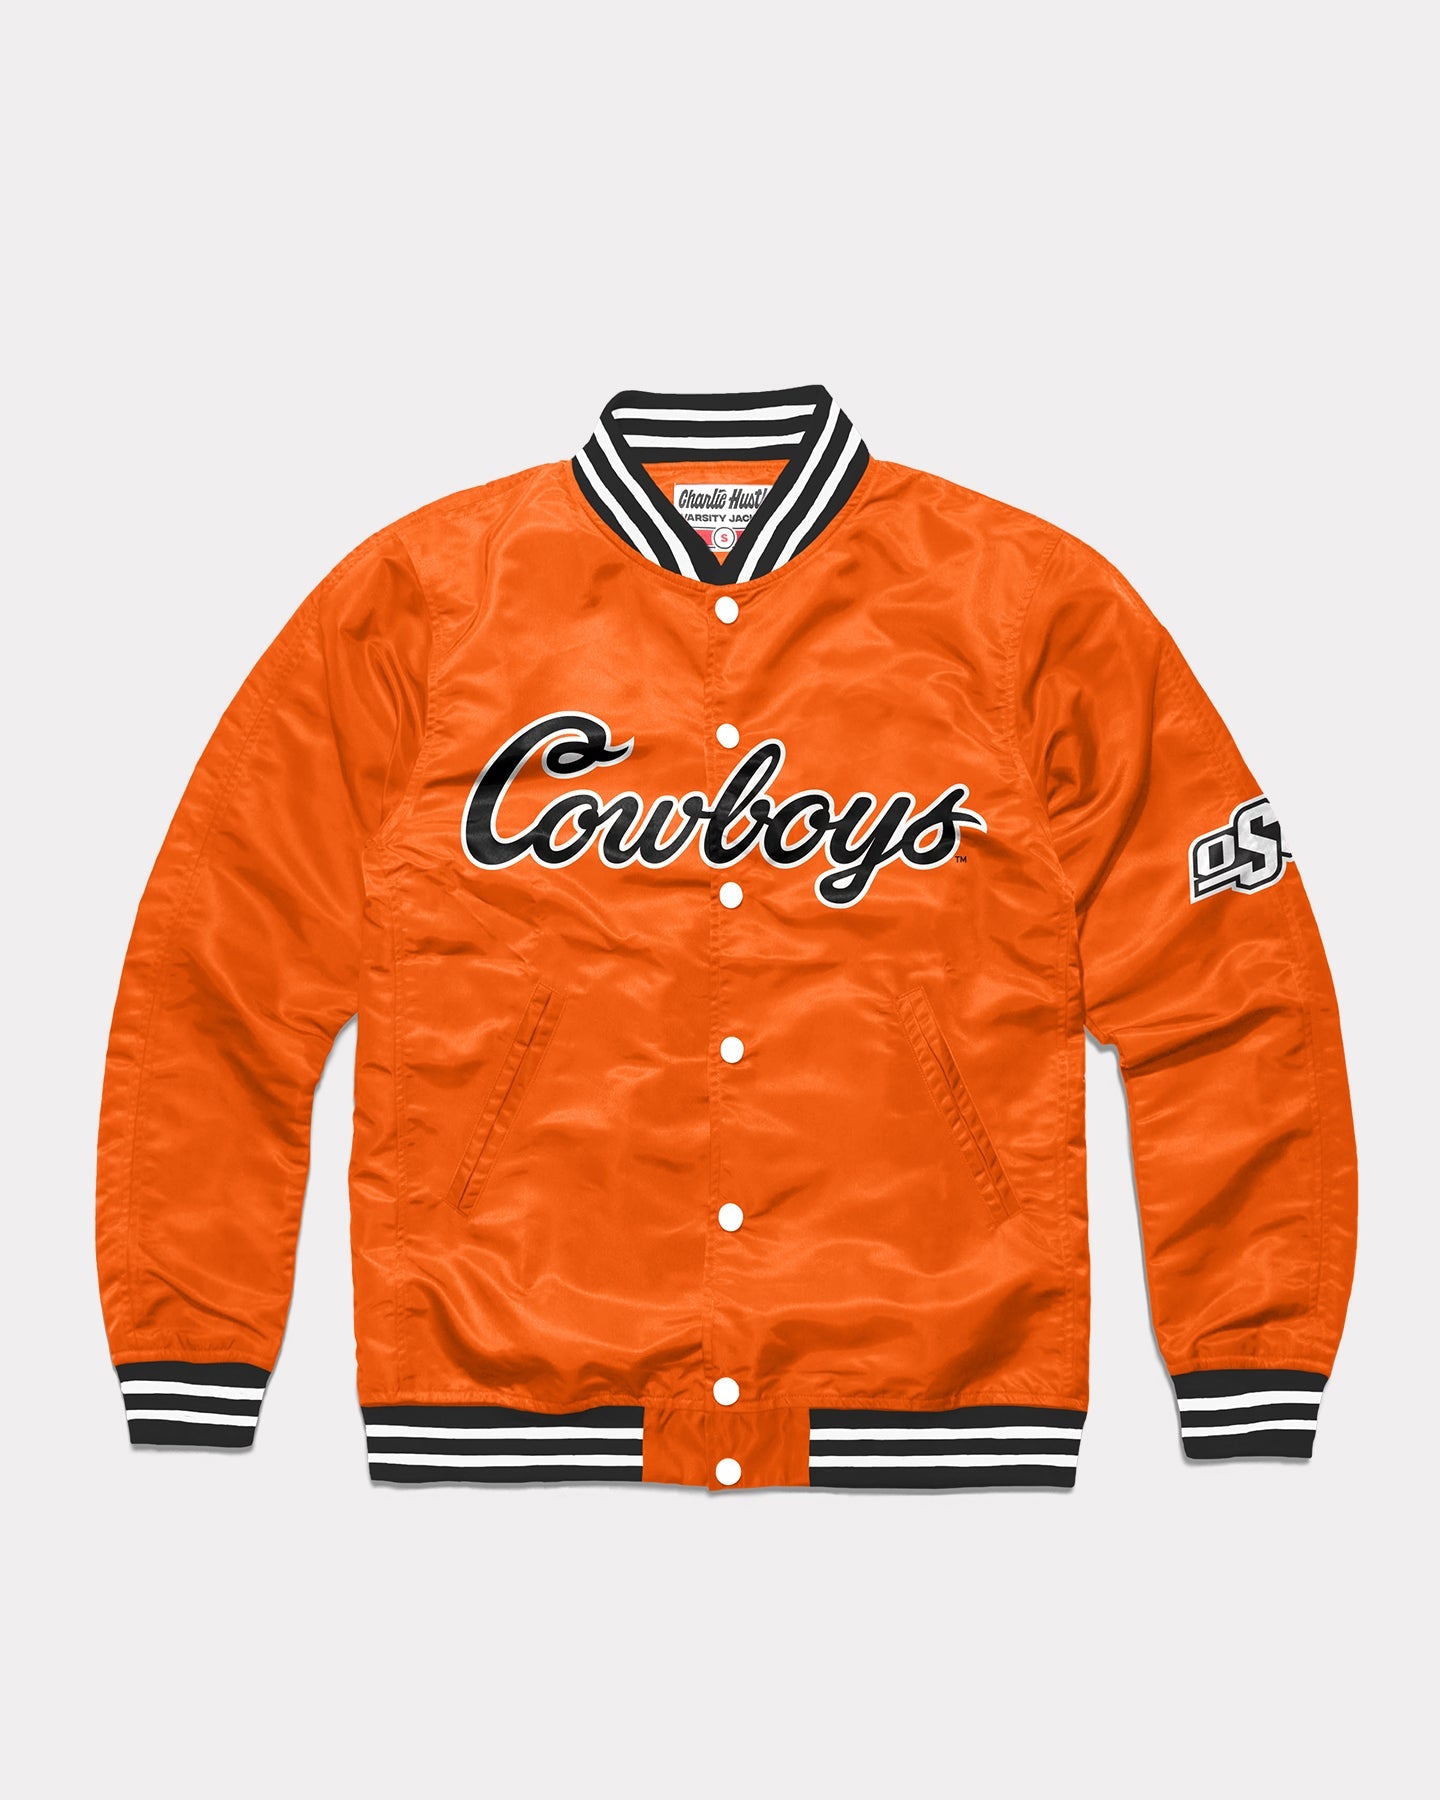 Vintage New York Yankees Varsity Jacket - Maker of Jacket